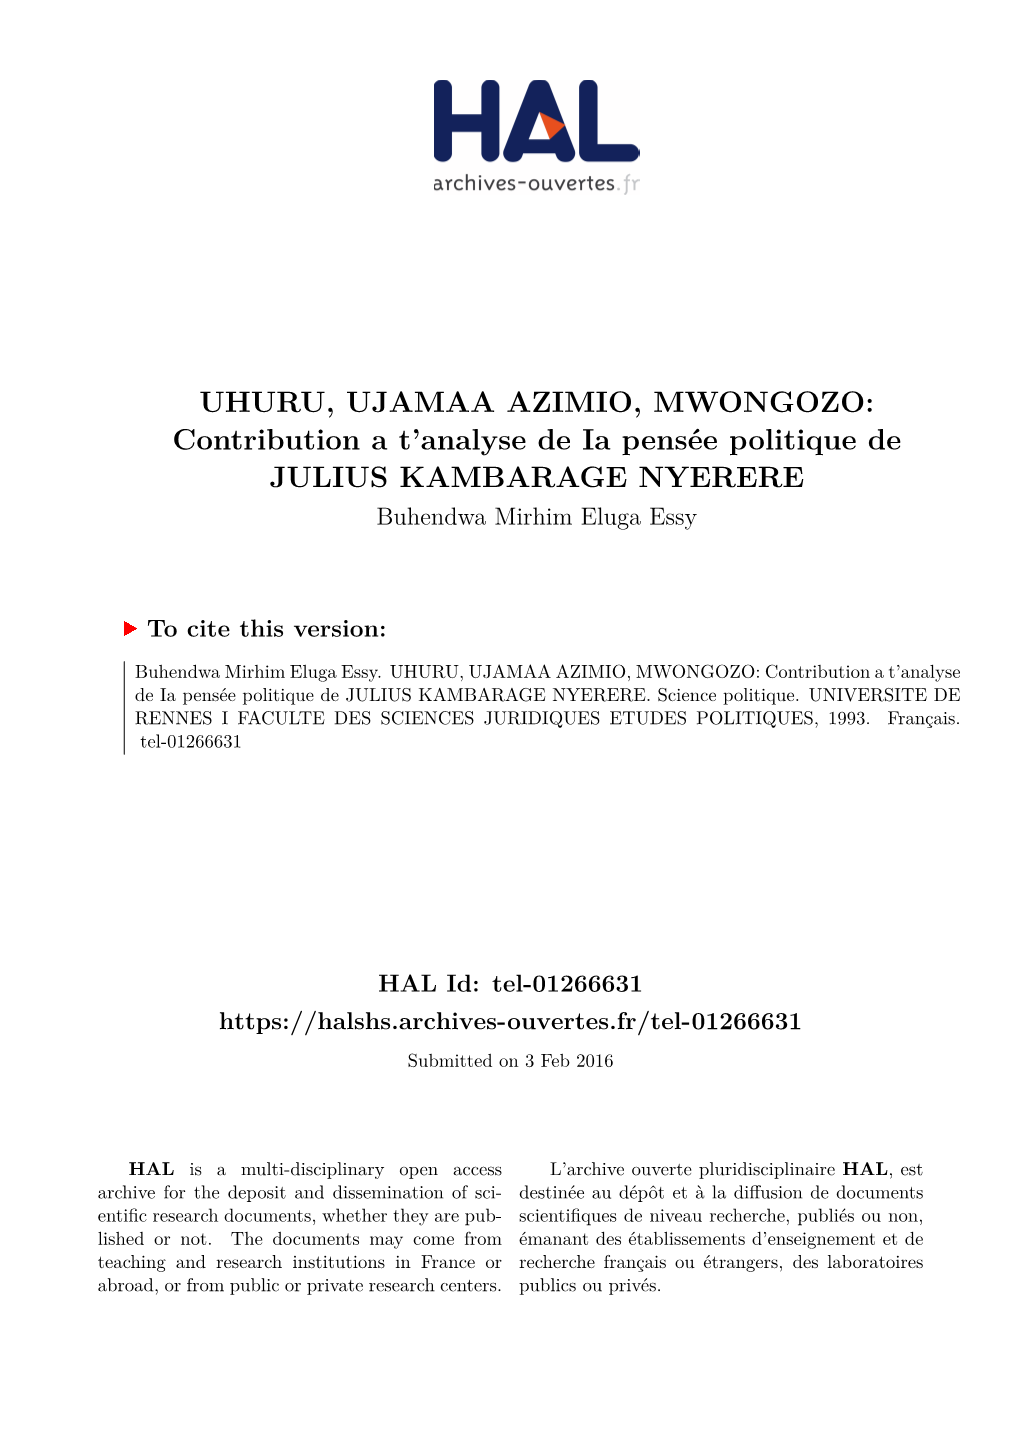 UHURU, UJAMAA AZIMIO, MWONGOZO: Contribution a T’Analyse De Ia Pensée Politique De JULIUS KAMBARAGE NYERERE Buhendwa Mirhim Eluga Essy